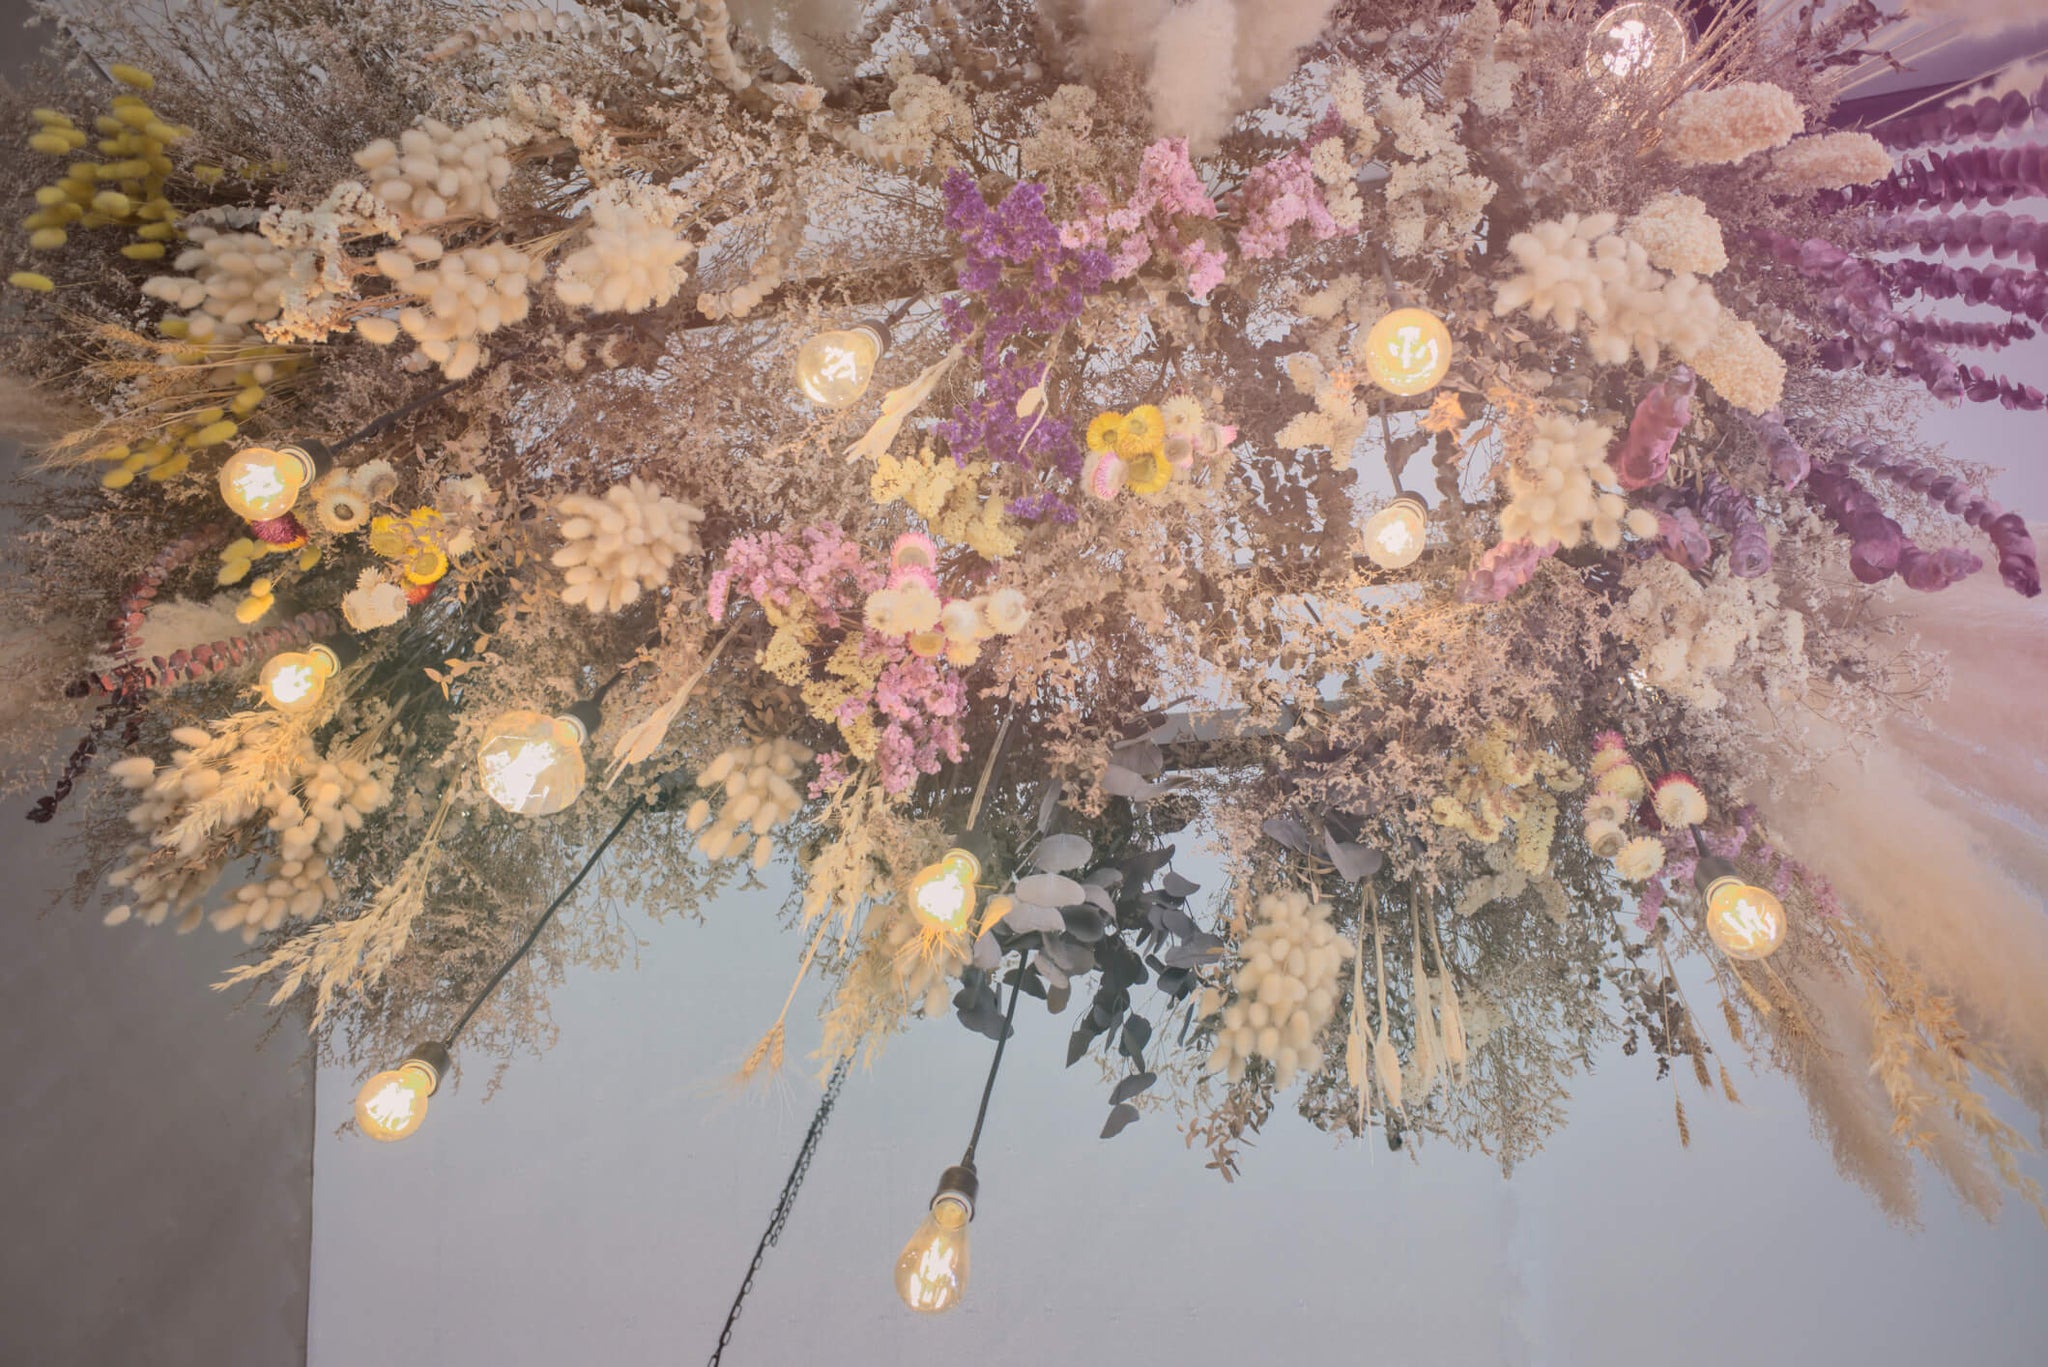 Dried flower chandeliers by Hidden Botanics.